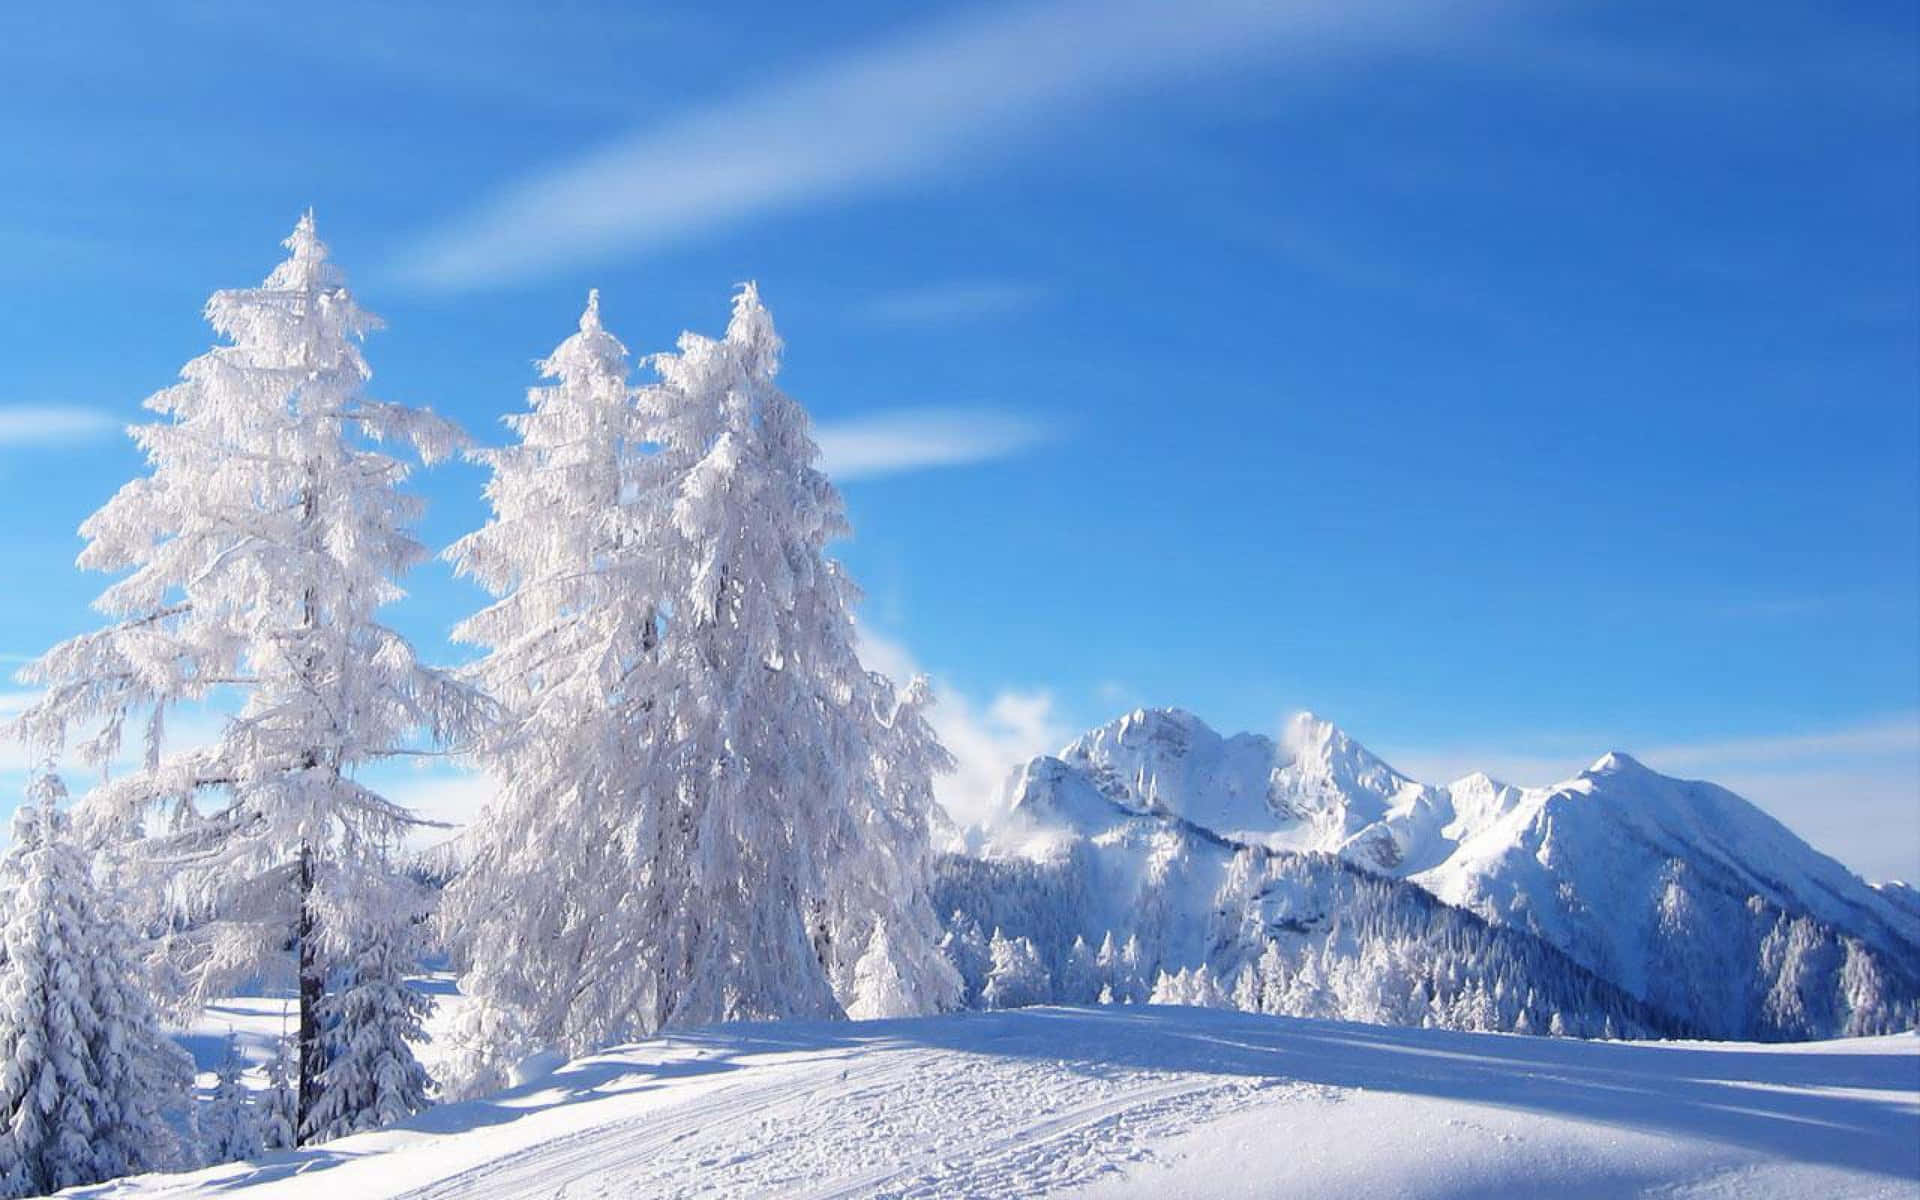 A winter wonderland of snowy trees.